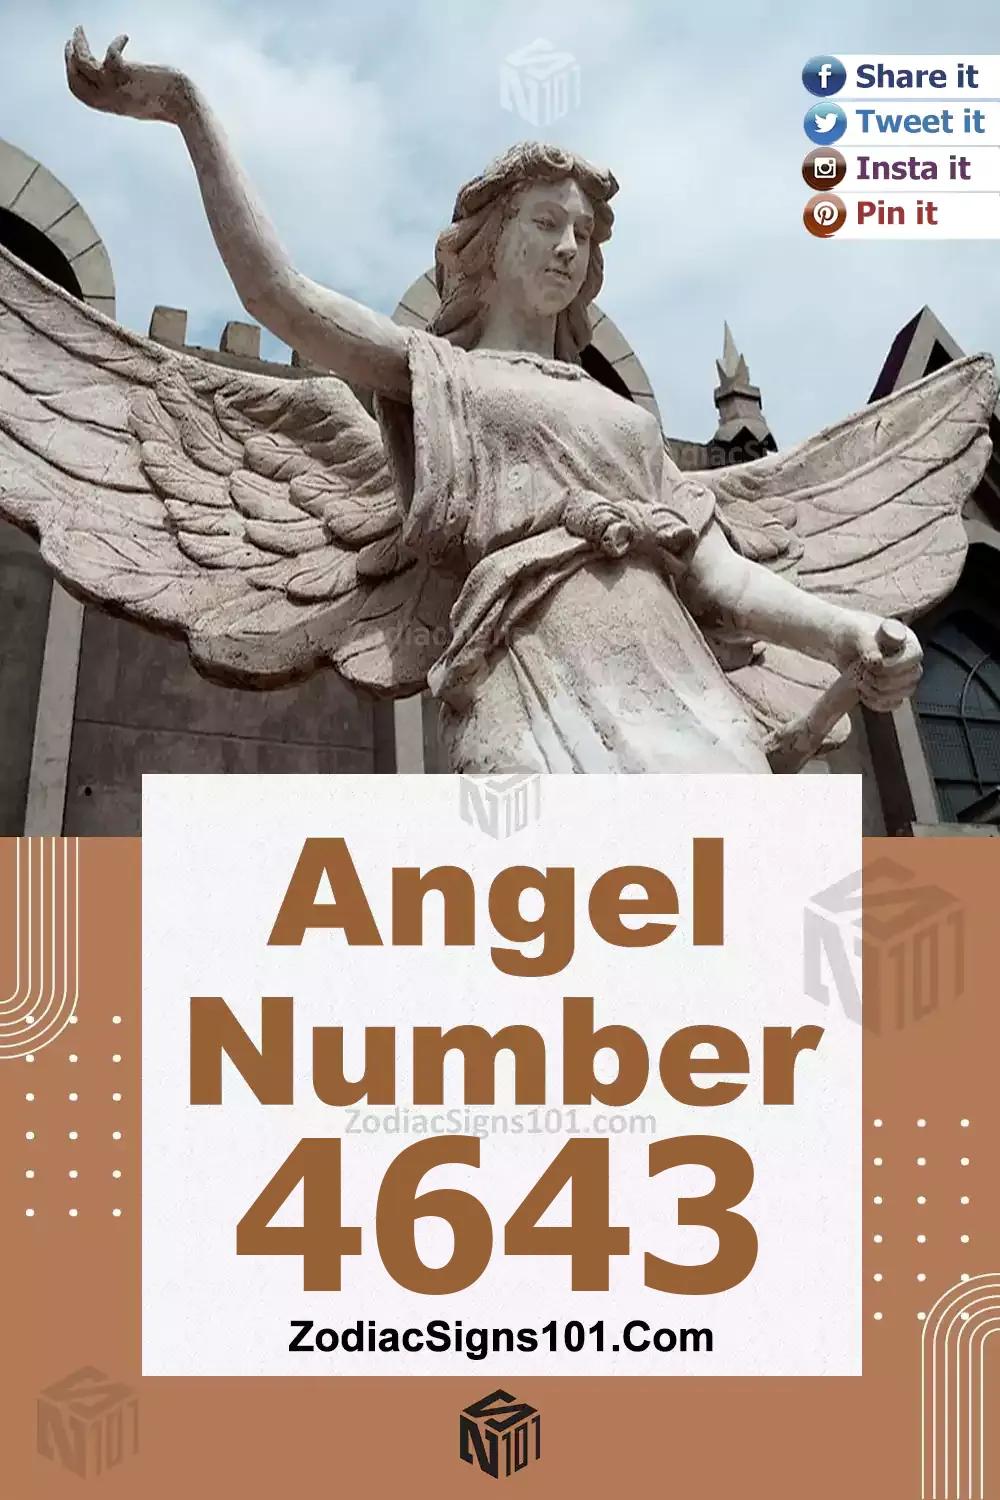 4643-Angel-Number-Meaning.jpg